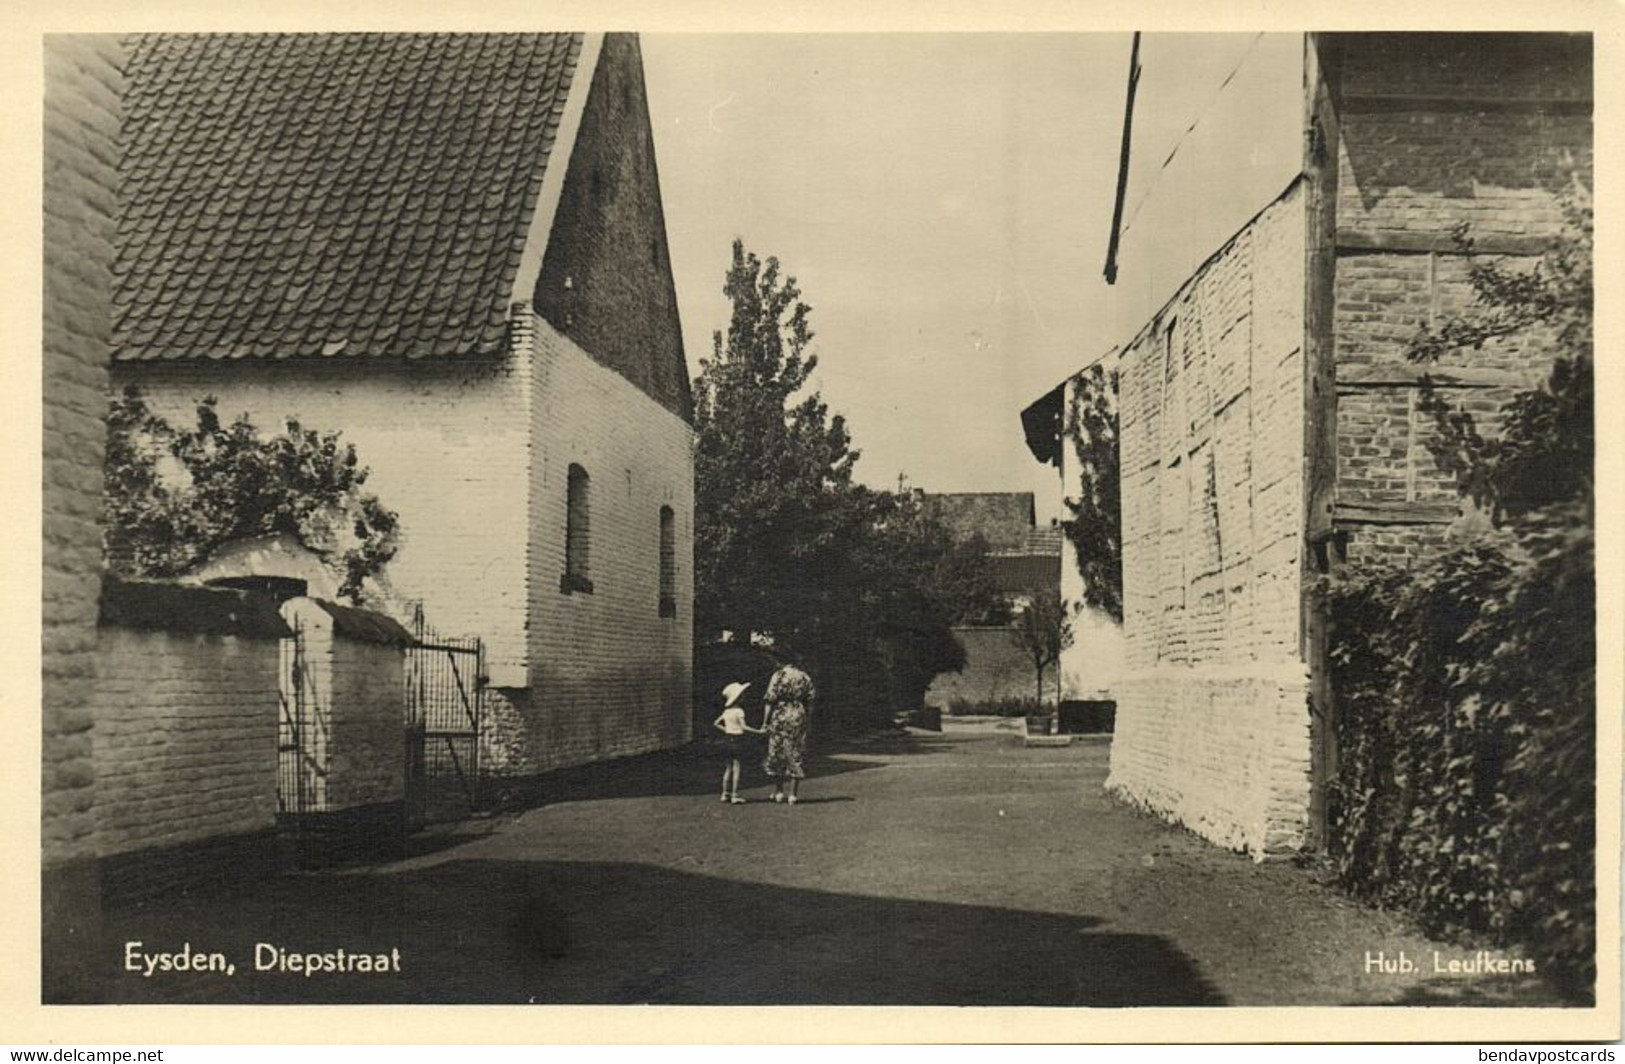 Nederland, EYSDEN, Diepstraat (1950s) Hub. Leufkens RPPC Ansichtkaart - Eijsden